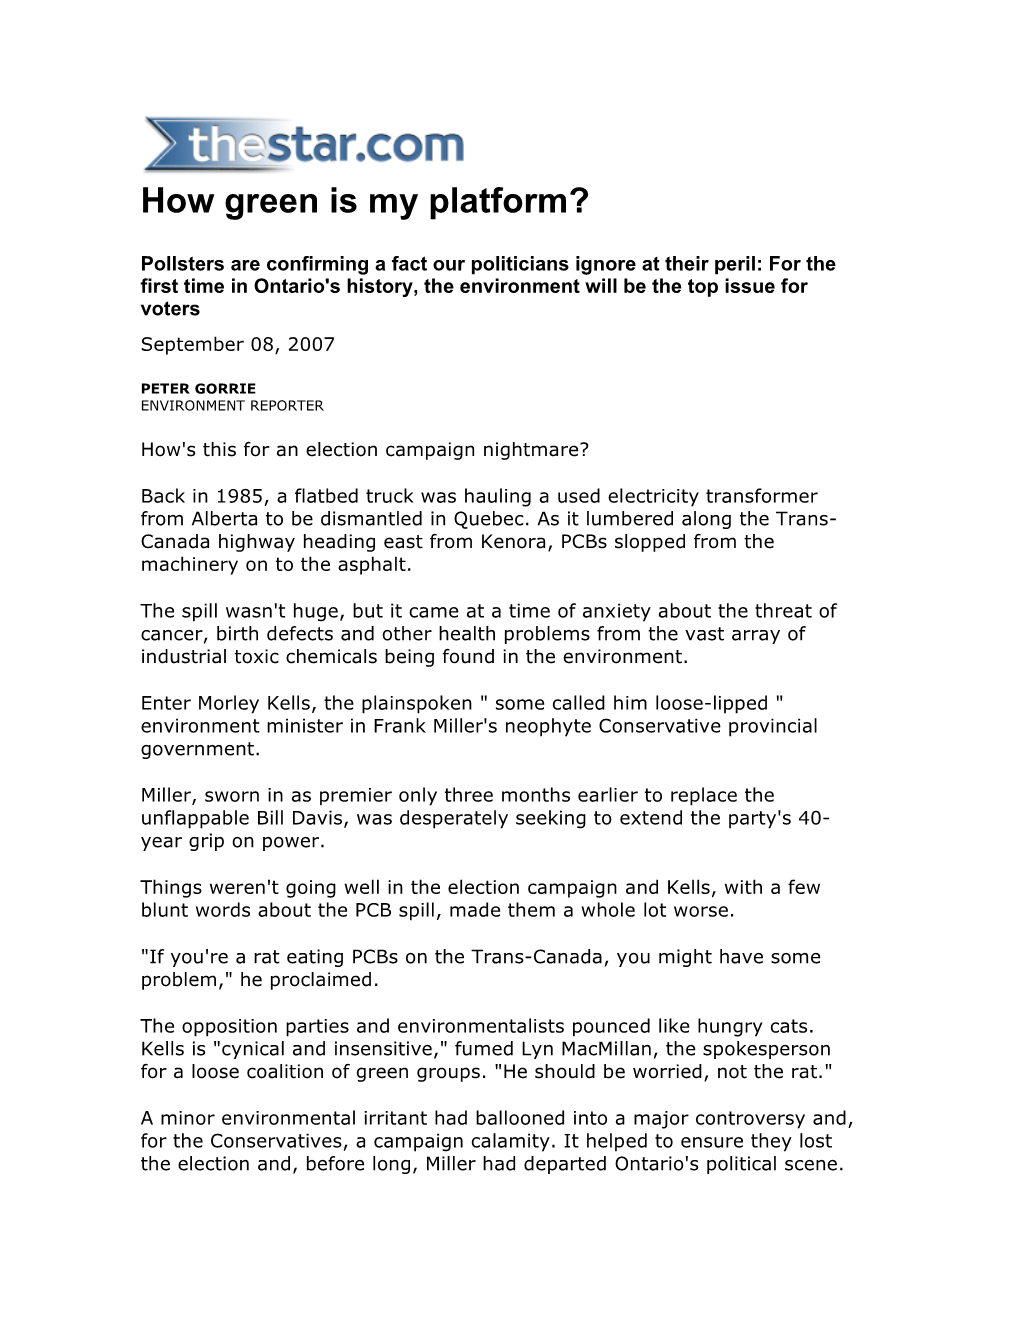 How Green Is My Platform?